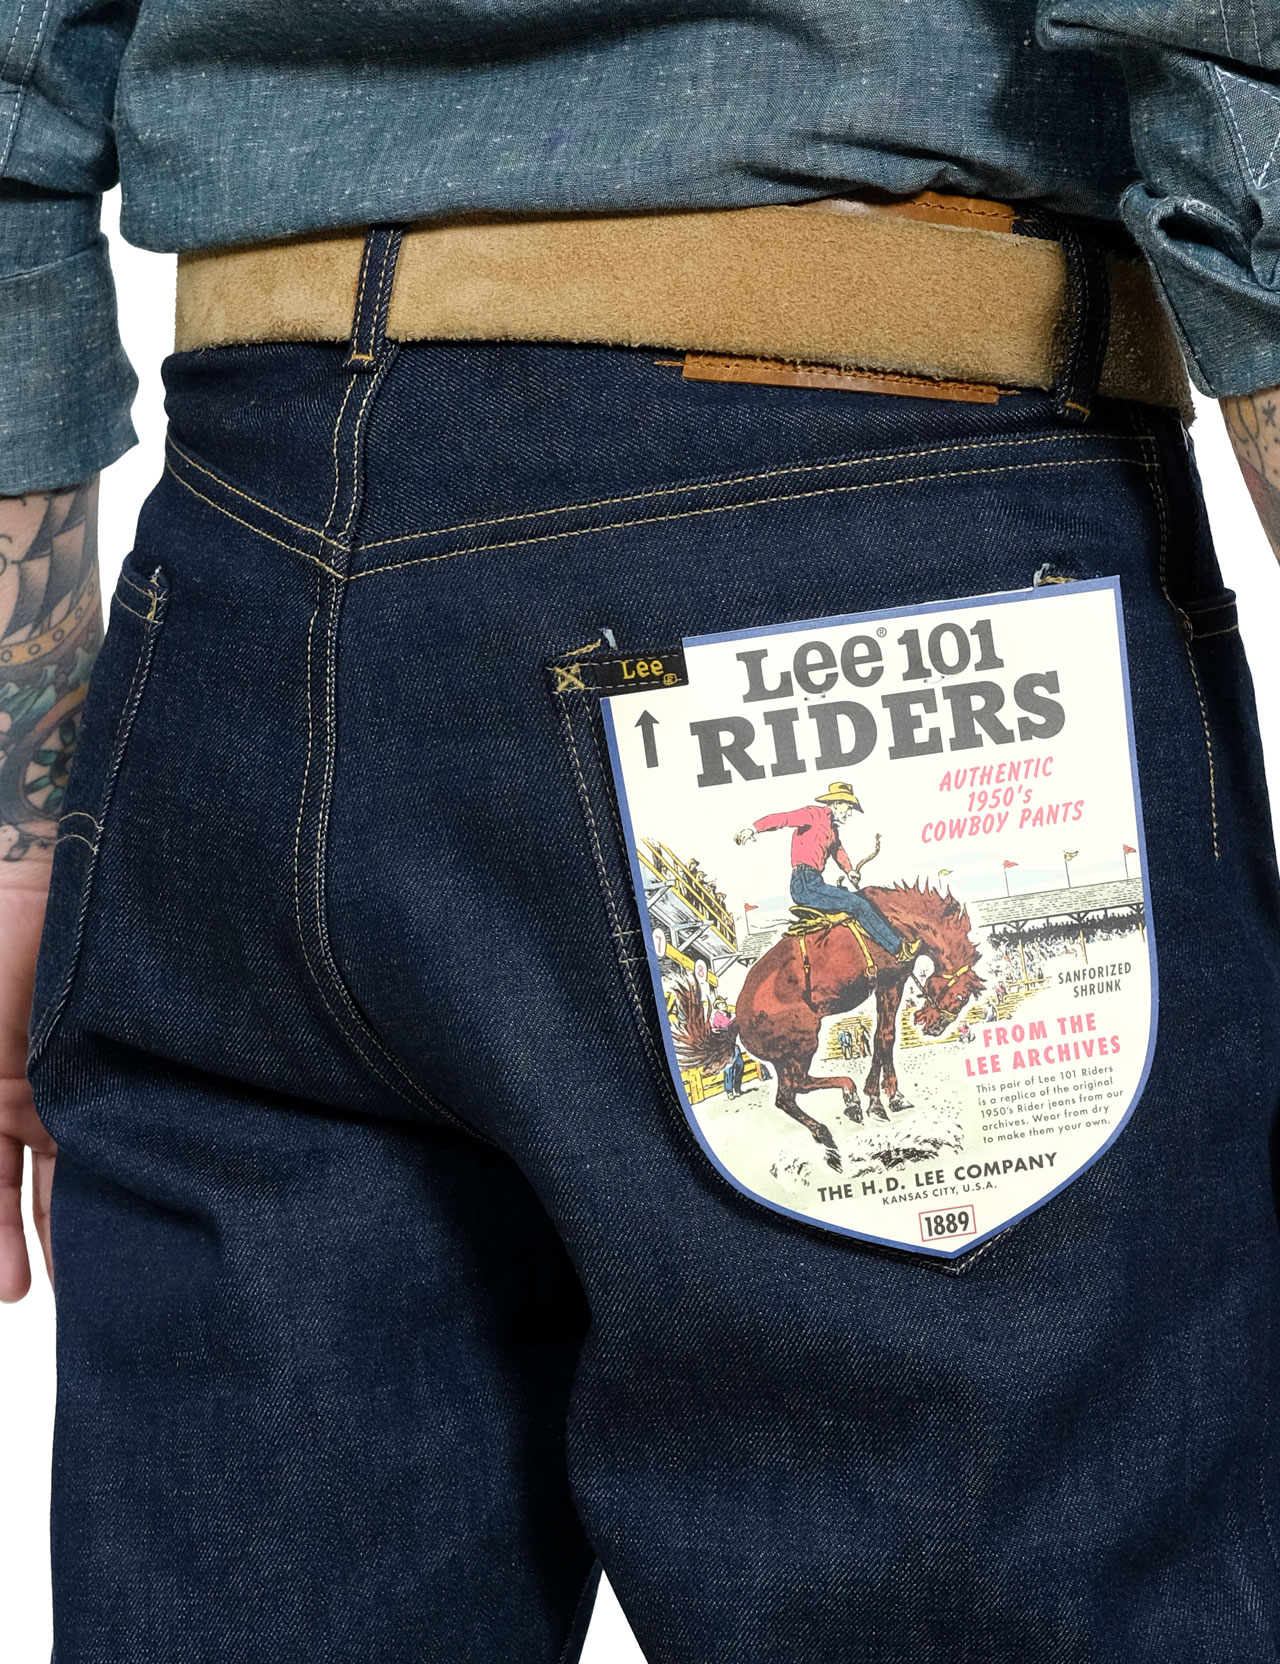 毎日続々入荷 Lee Riders Authentic Cowboy Pants kids-nurie.com